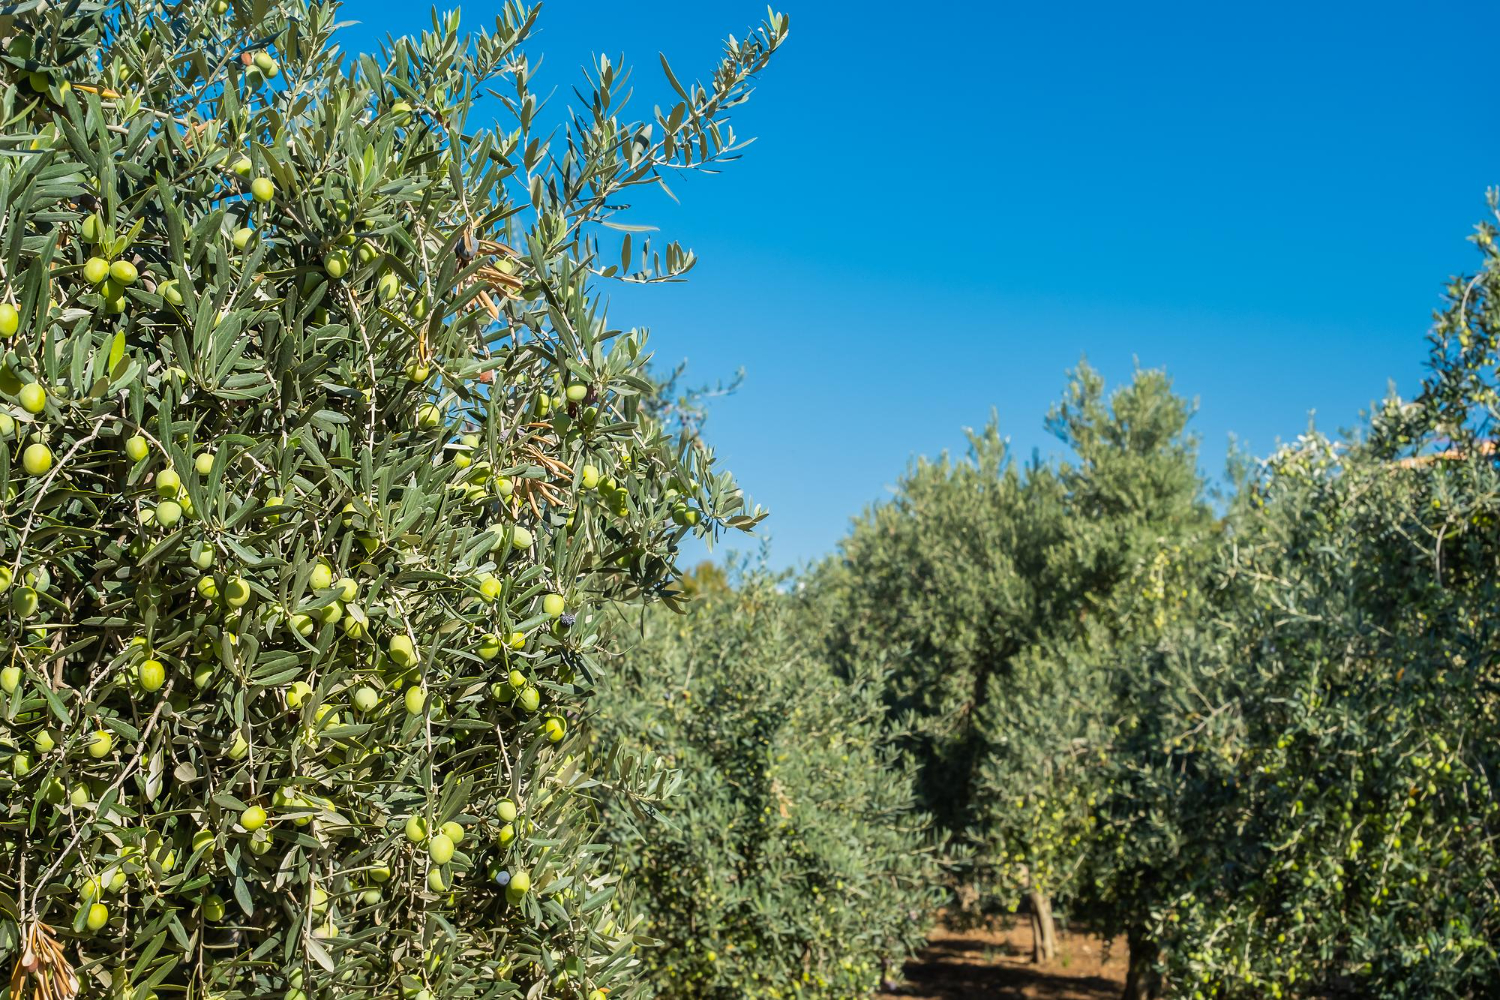 recoleccion agricola tradicional olivar cultivo aceitunas naturales ecologicas enfoque selectivo primer plano idea antecedentes publicidad productos agricolas ecologicos